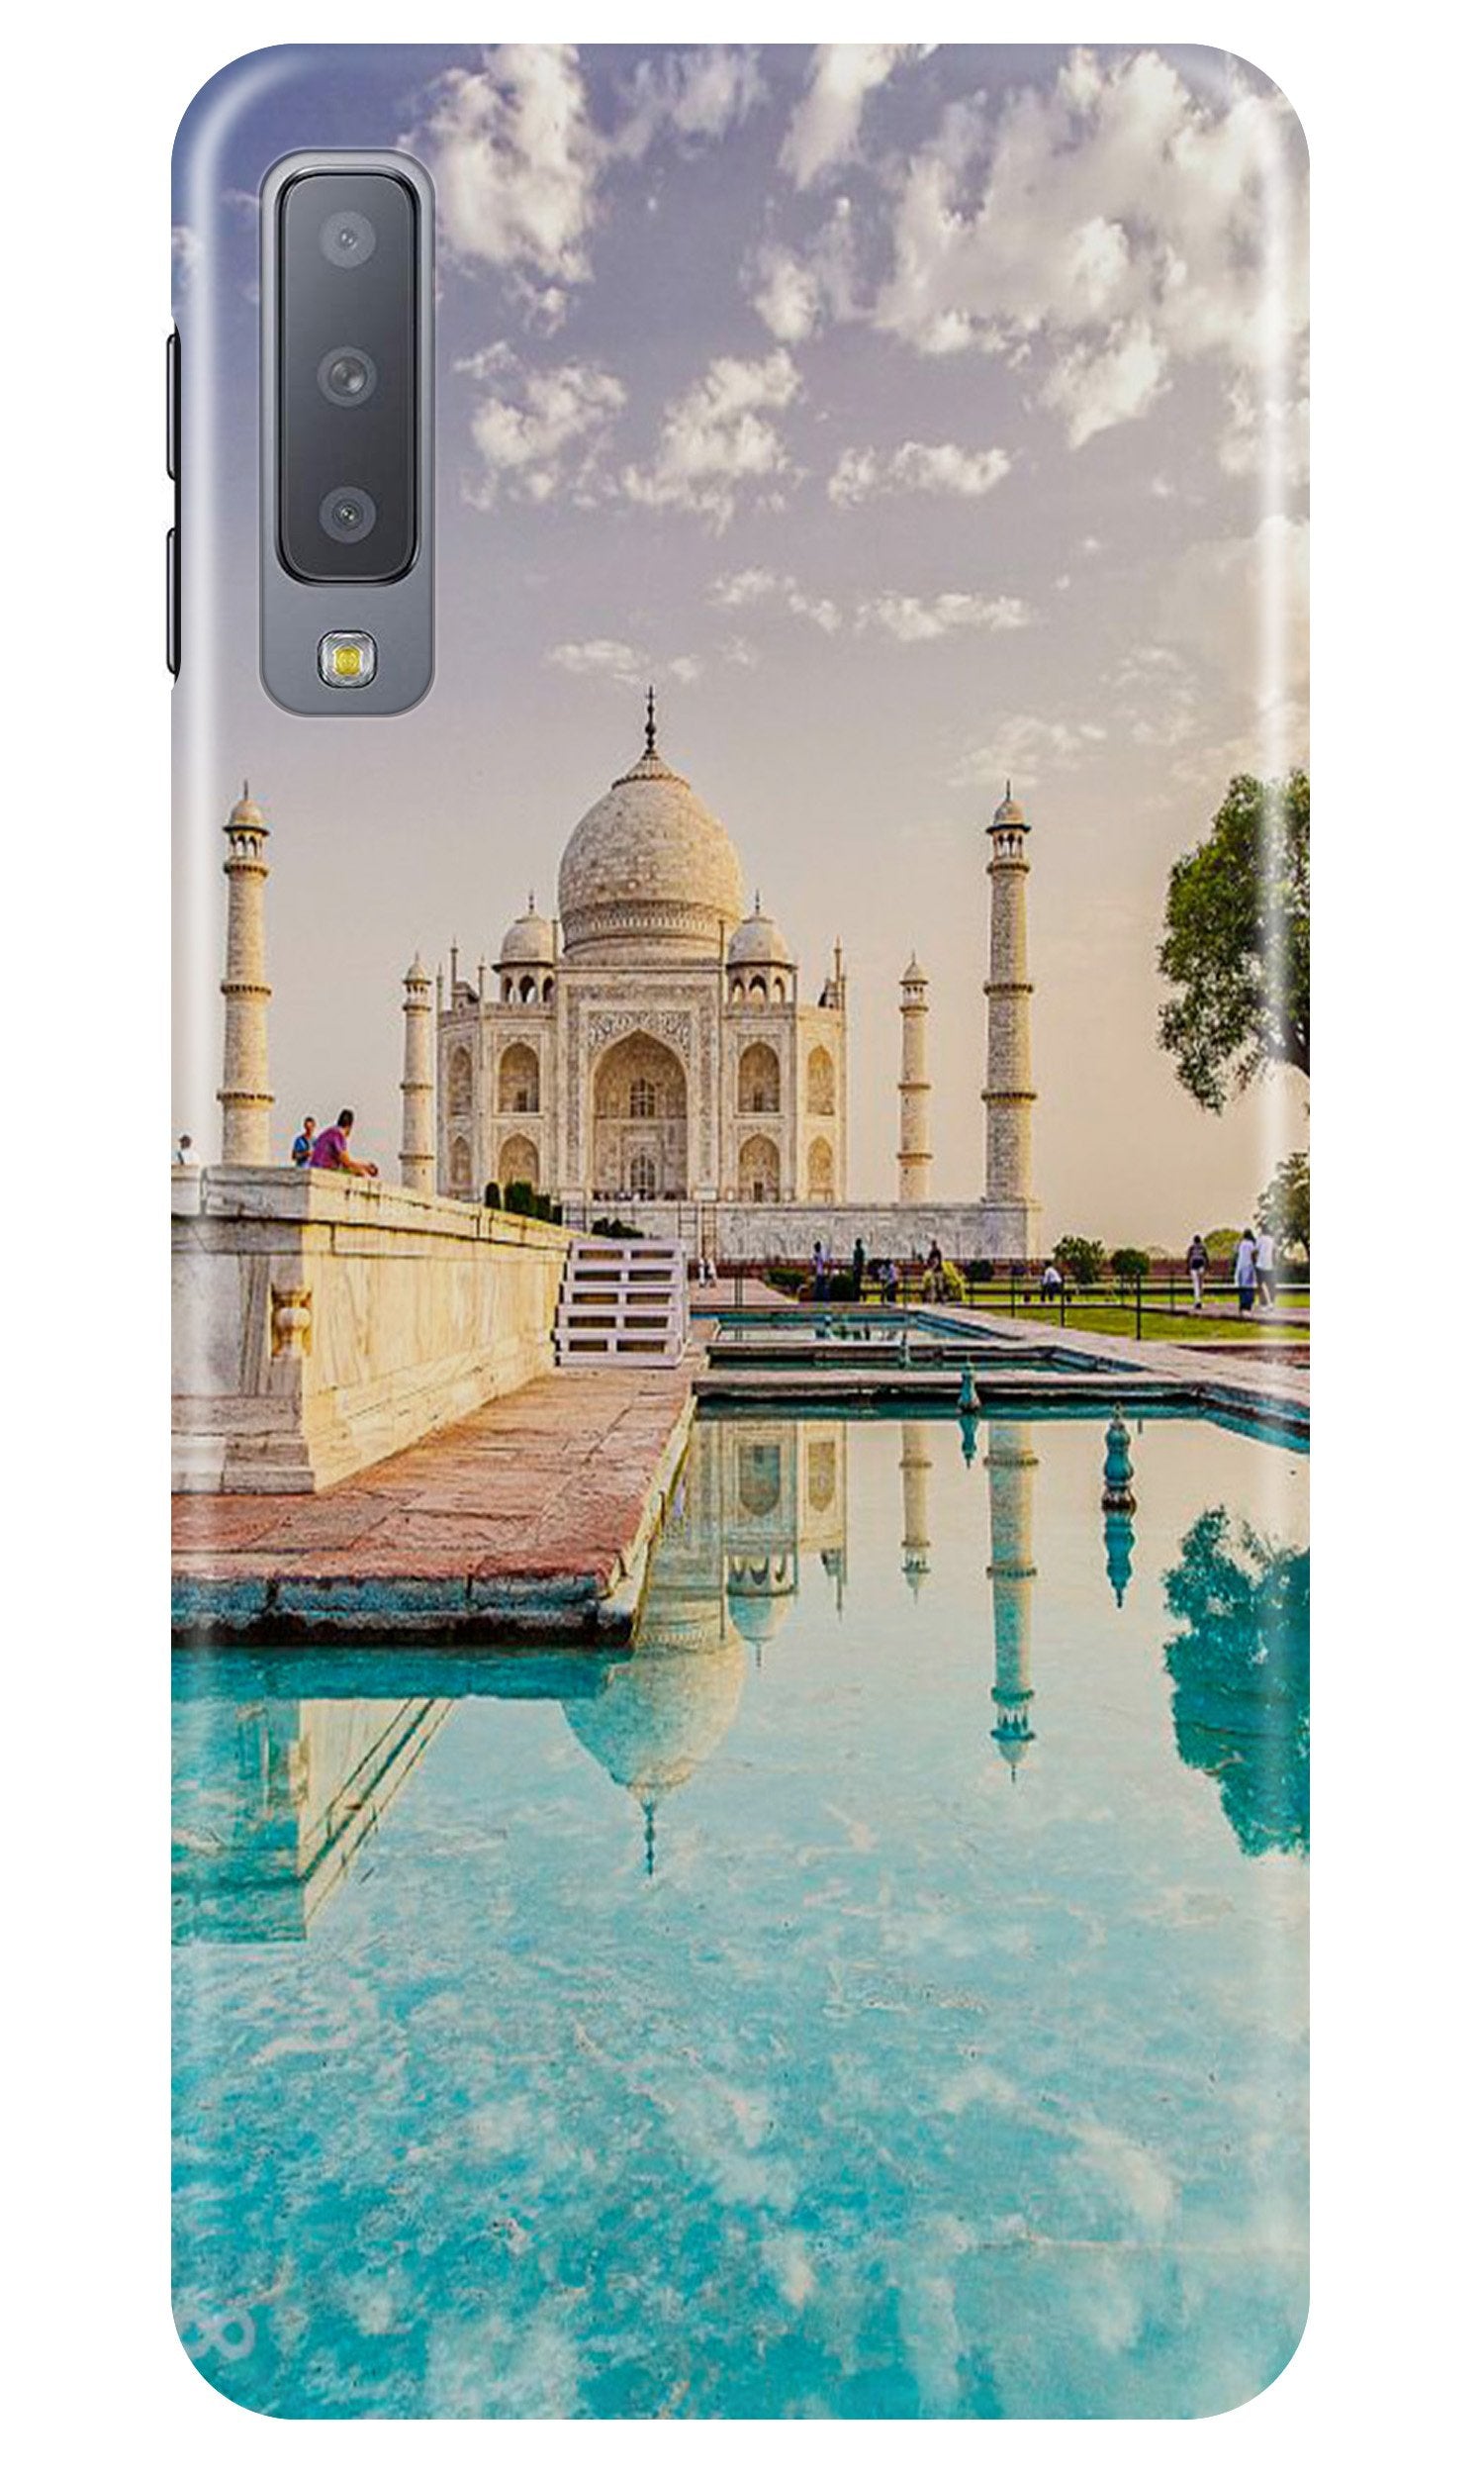 Taj Mahal Case for Samung Galaxy A70s (Design No. 297)